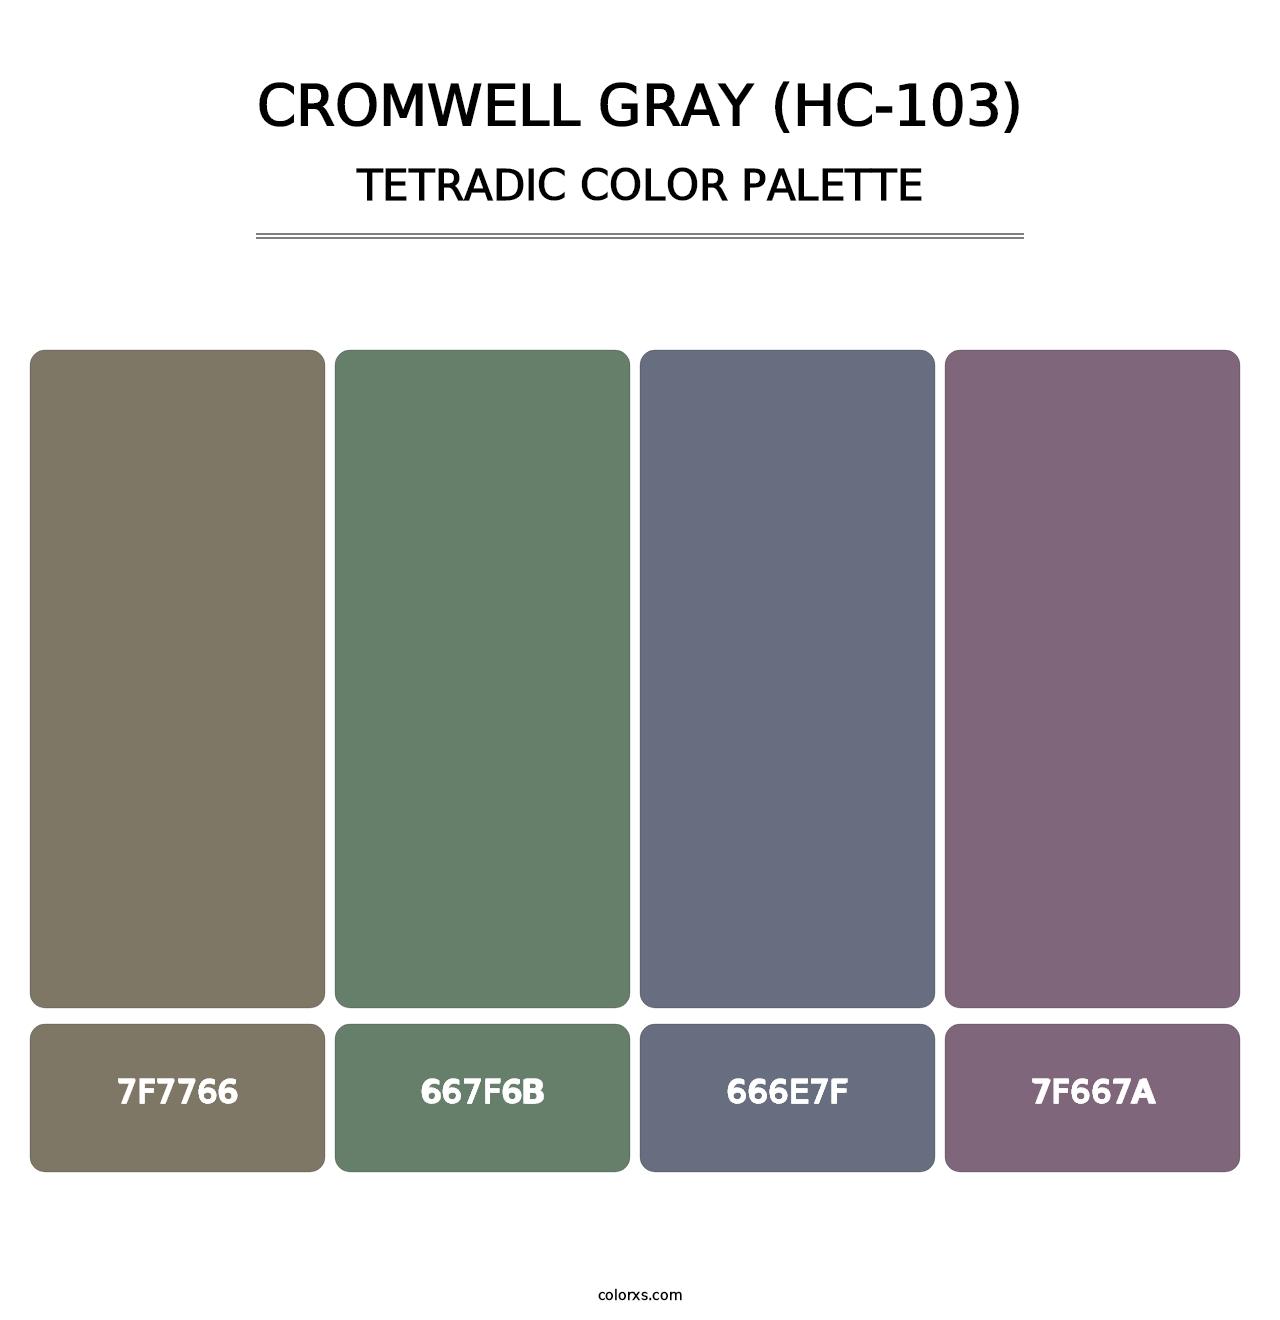 Cromwell Gray (HC-103) - Tetradic Color Palette